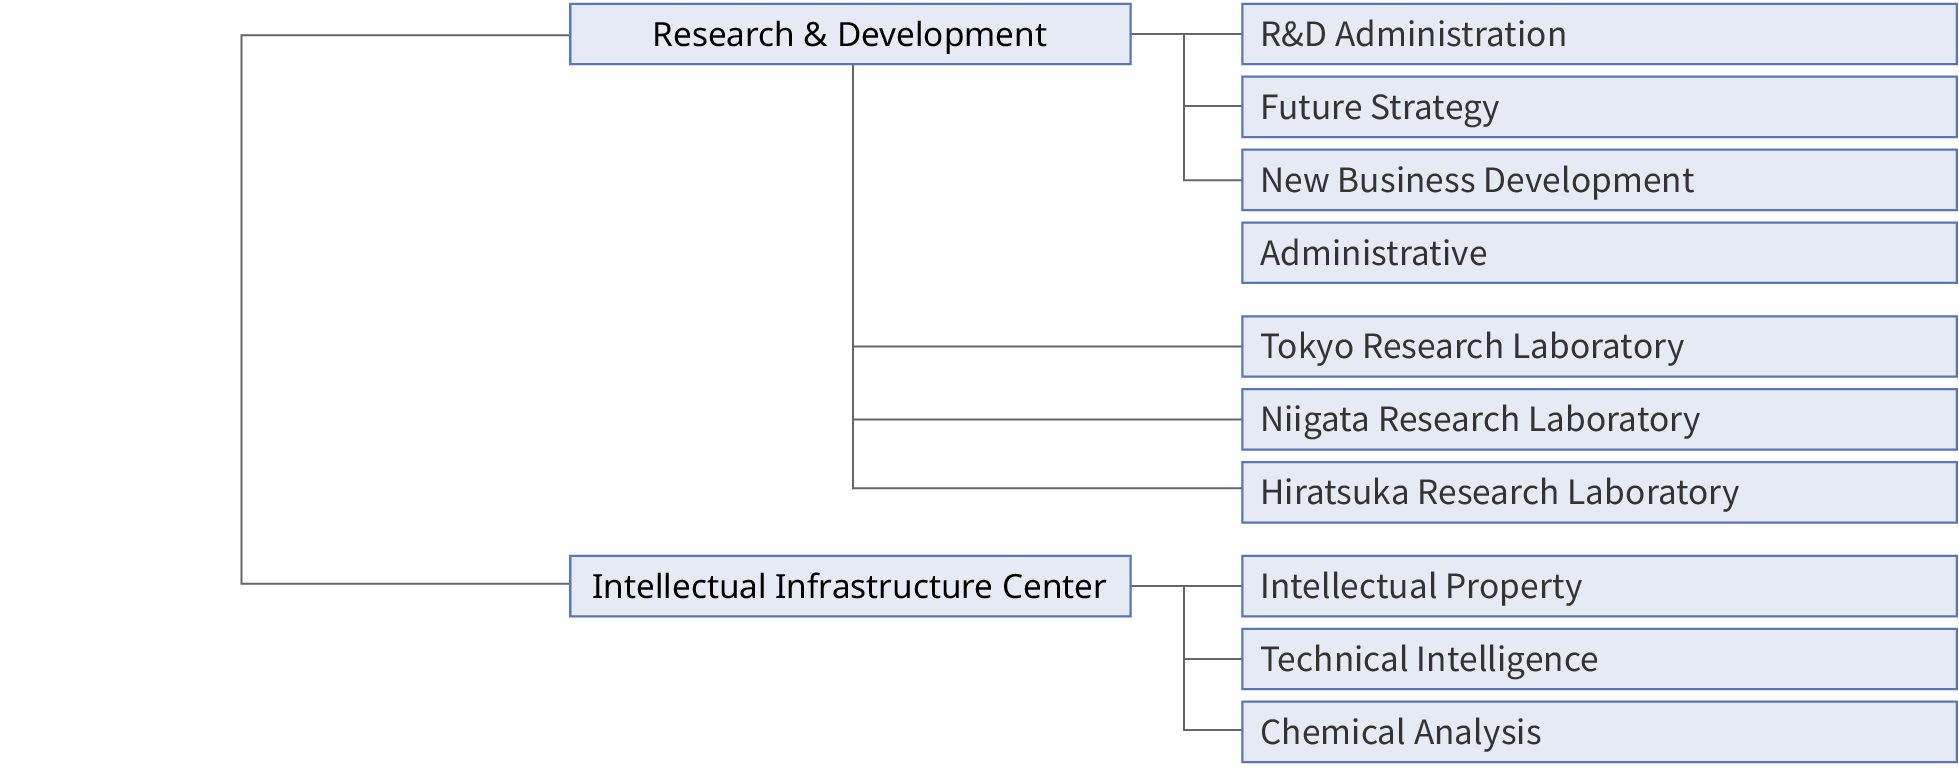 Figure: organization chart 4. it shows research & development etc.